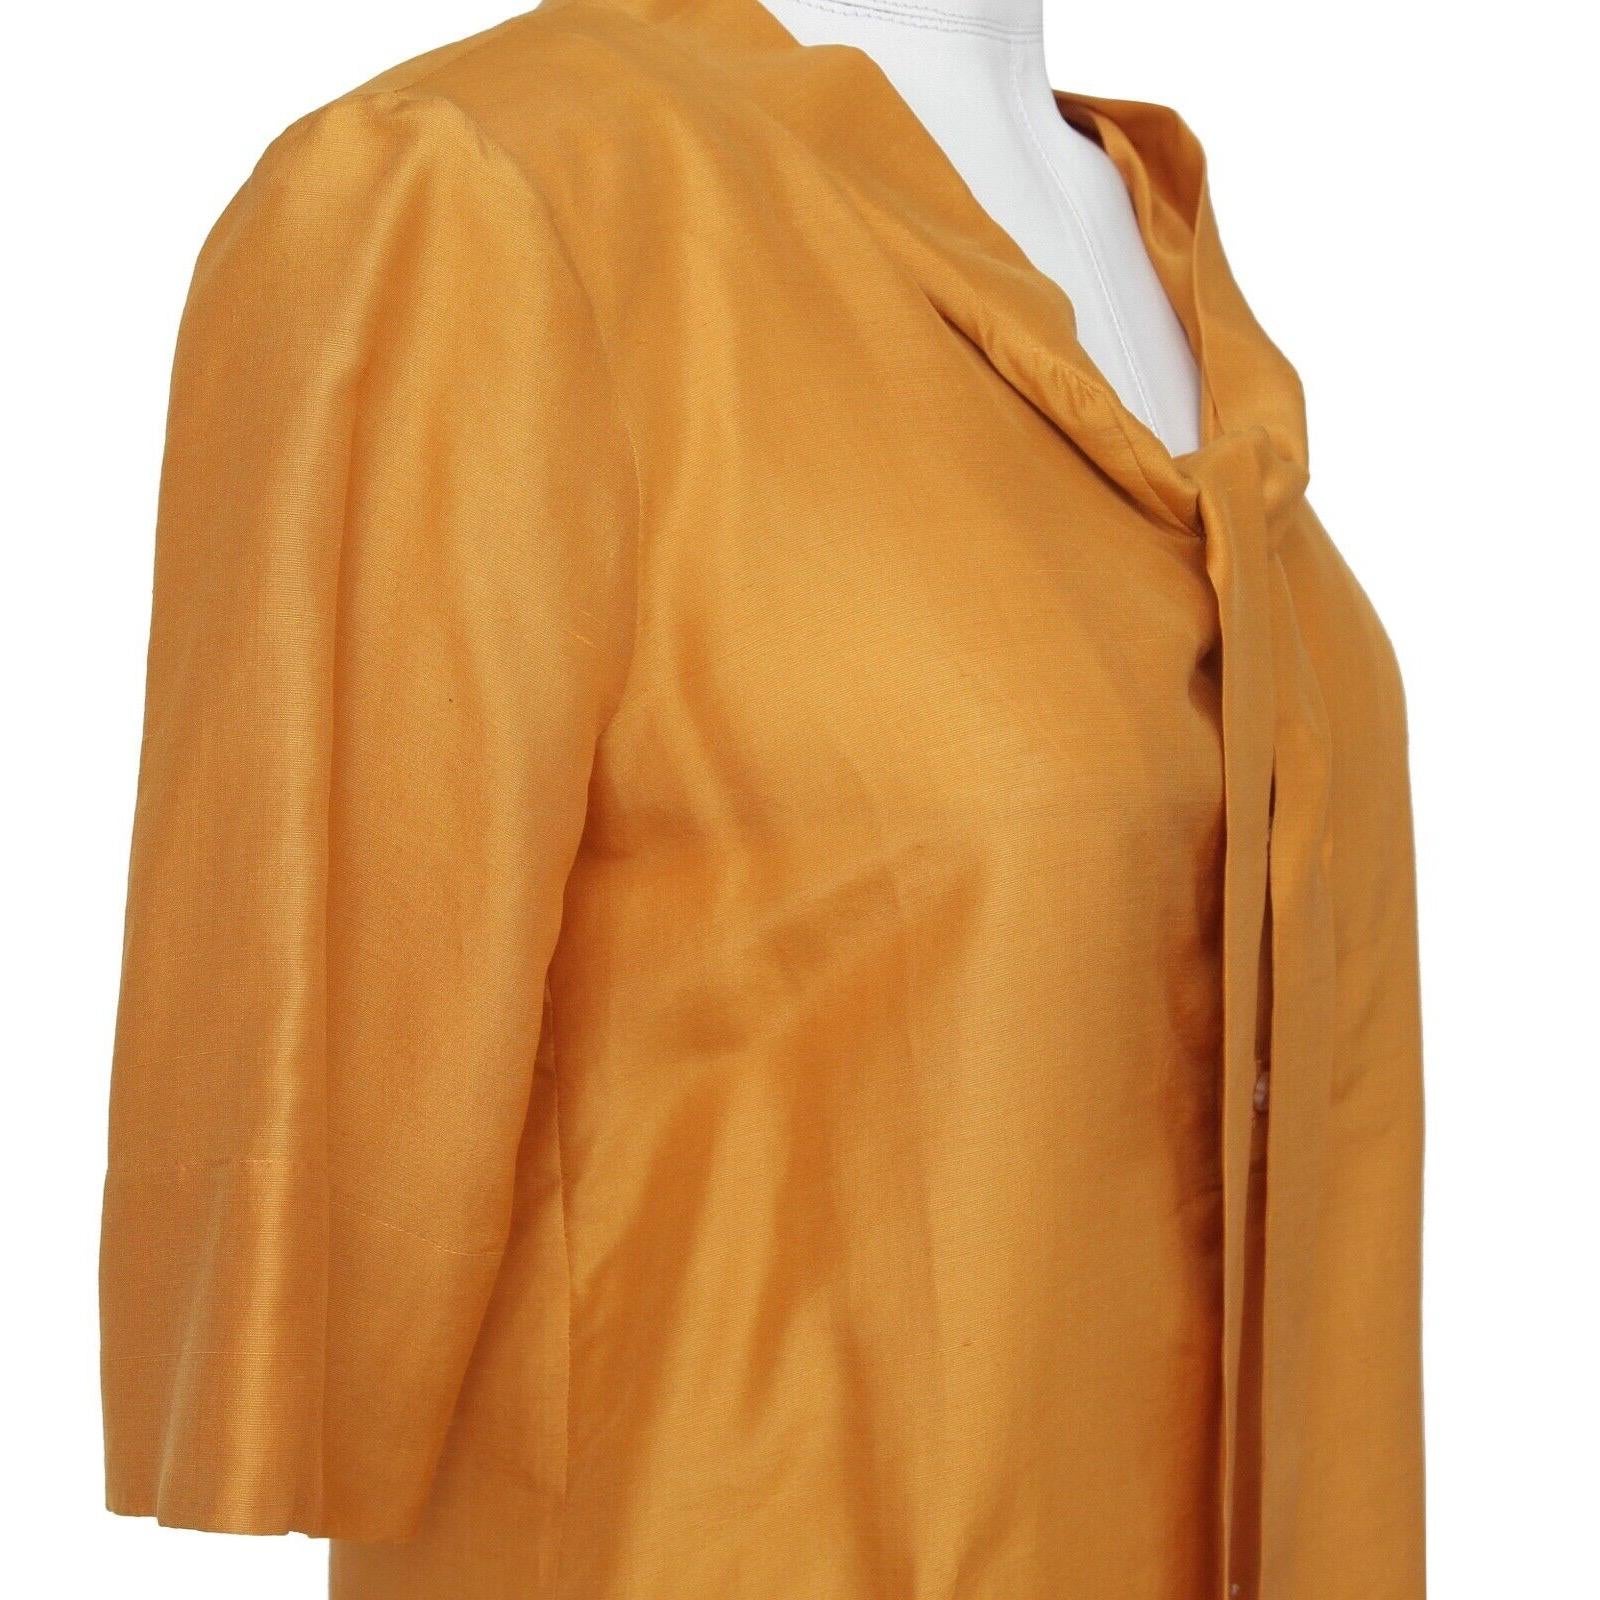 CHLOE Blouse Shirt Marigold Yellow Orange Silk Short Sleeve Sz 36 Fall 2007 For Sale 1